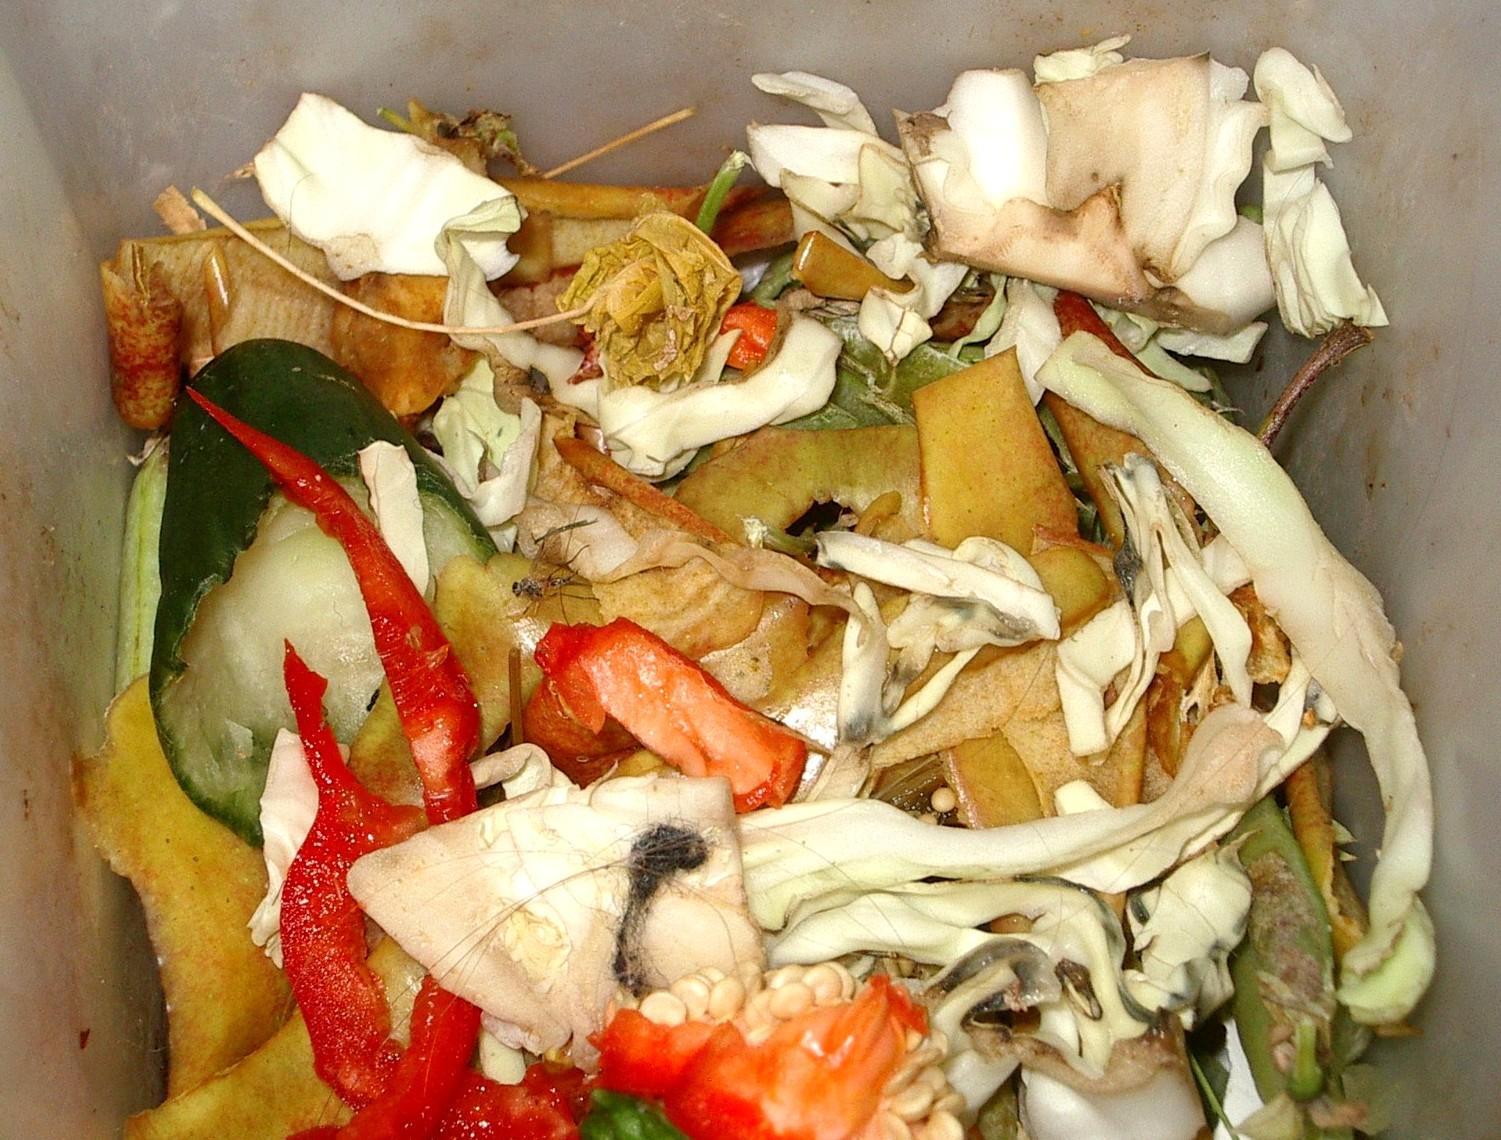 Bin of food waste